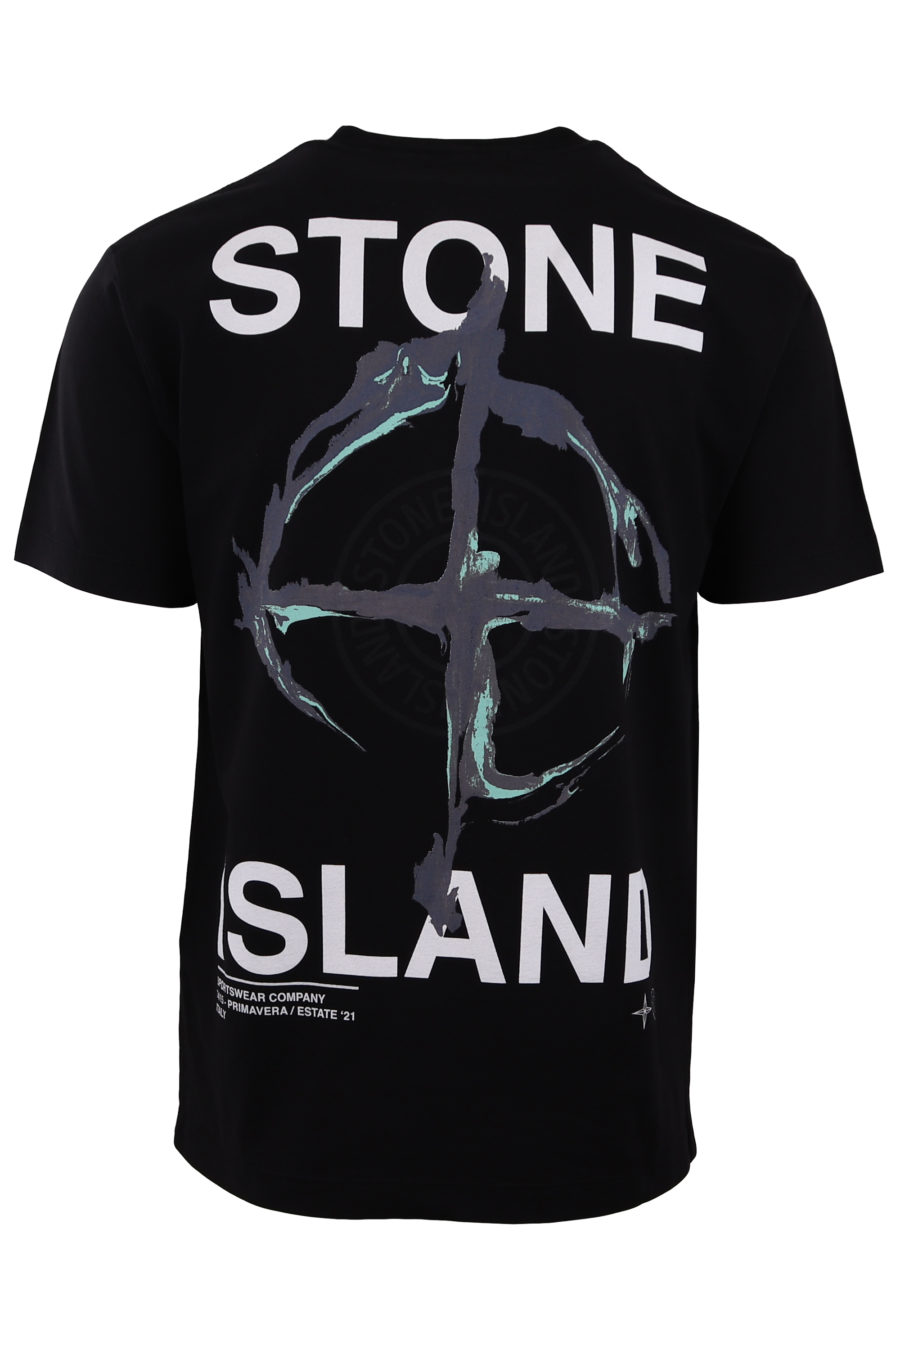 T-shirt Stone Island black with small logo - IMG 3189